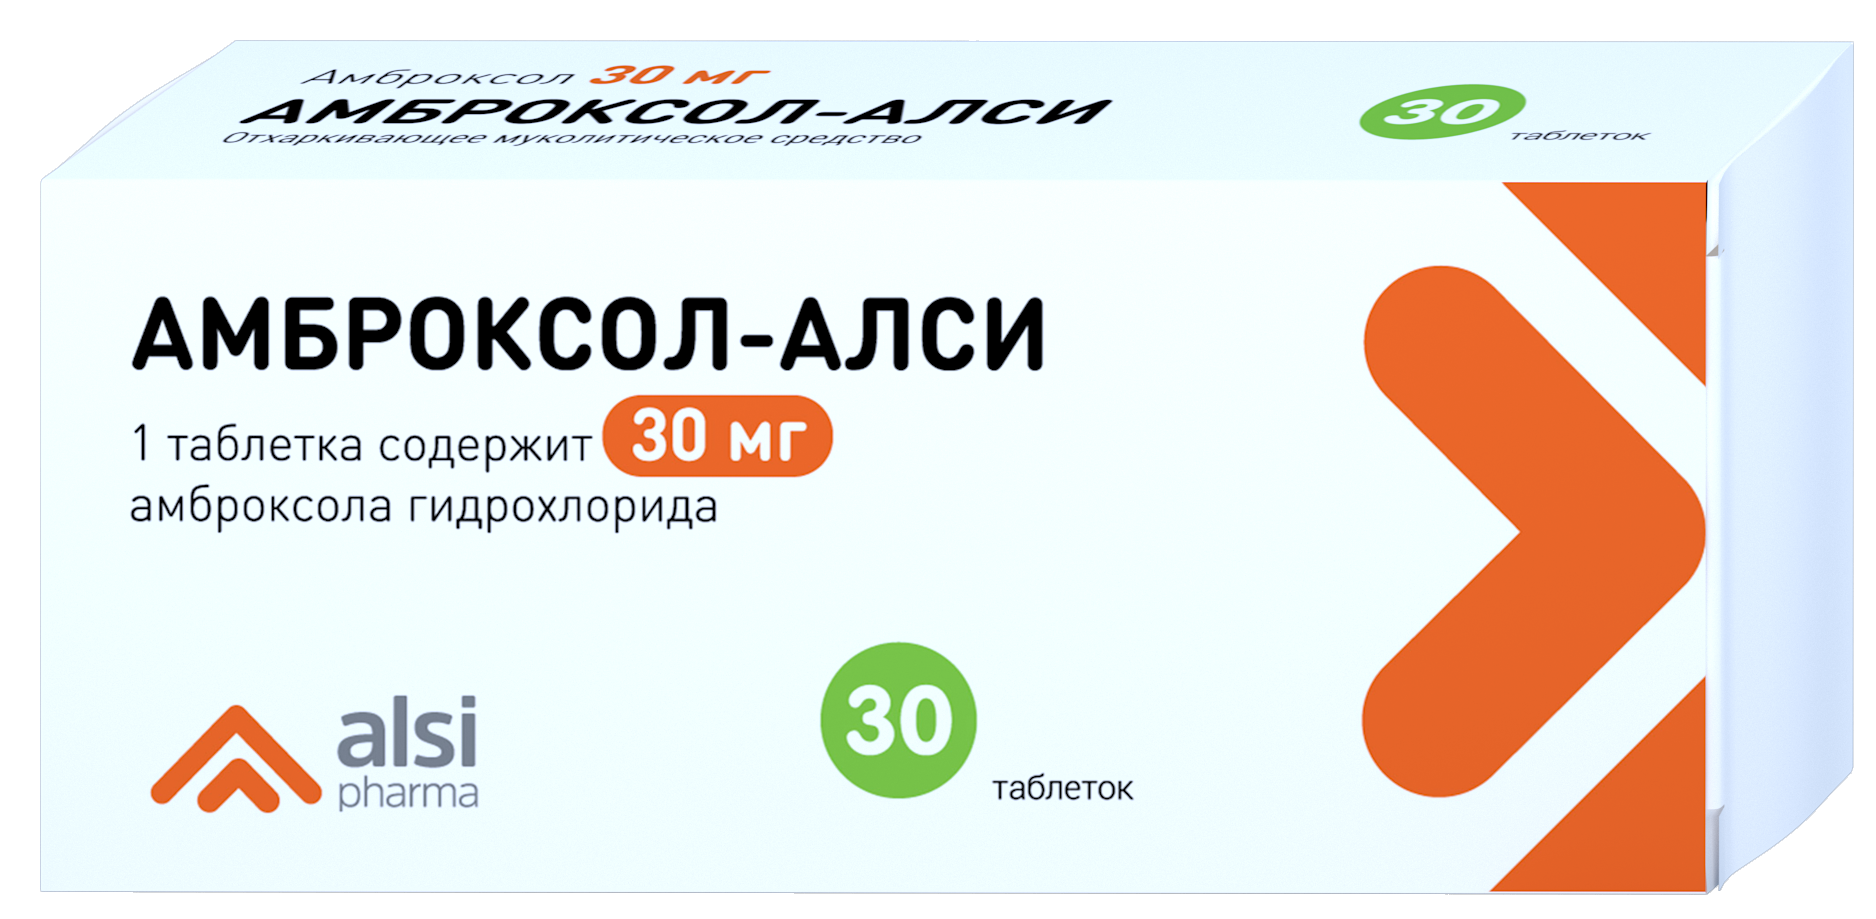 Амброксол-АЛСИ, таблетки 30 мг, 30 шт. амброксол таблетки 30мг 30шт